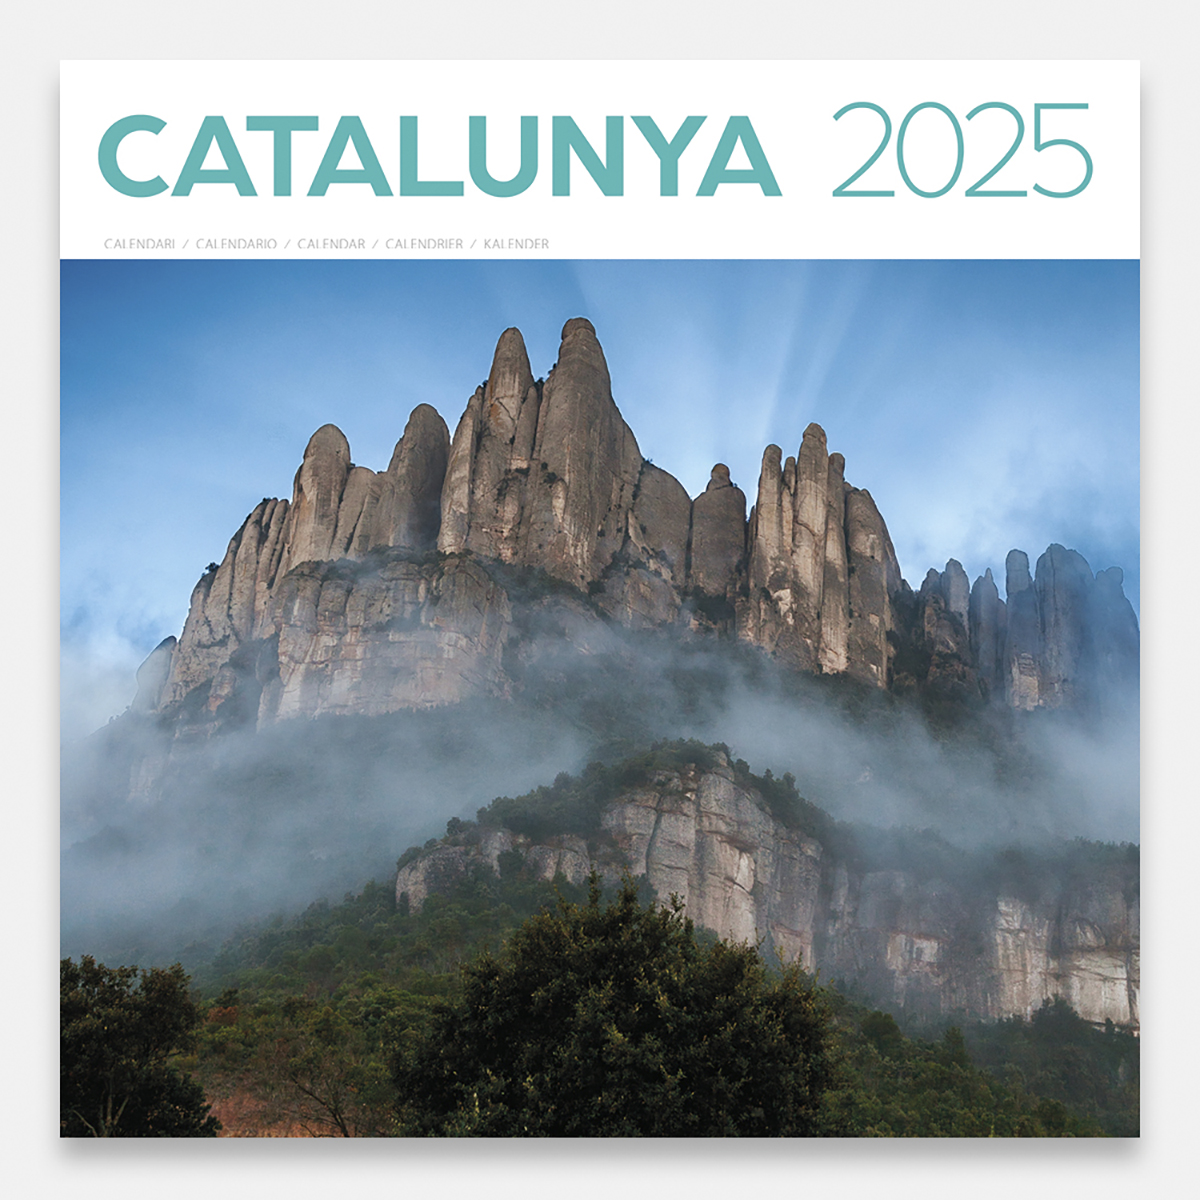 Calendrier 2025 Catalogne 25catg calendario pared 2025 catalunya cataluna catalonia